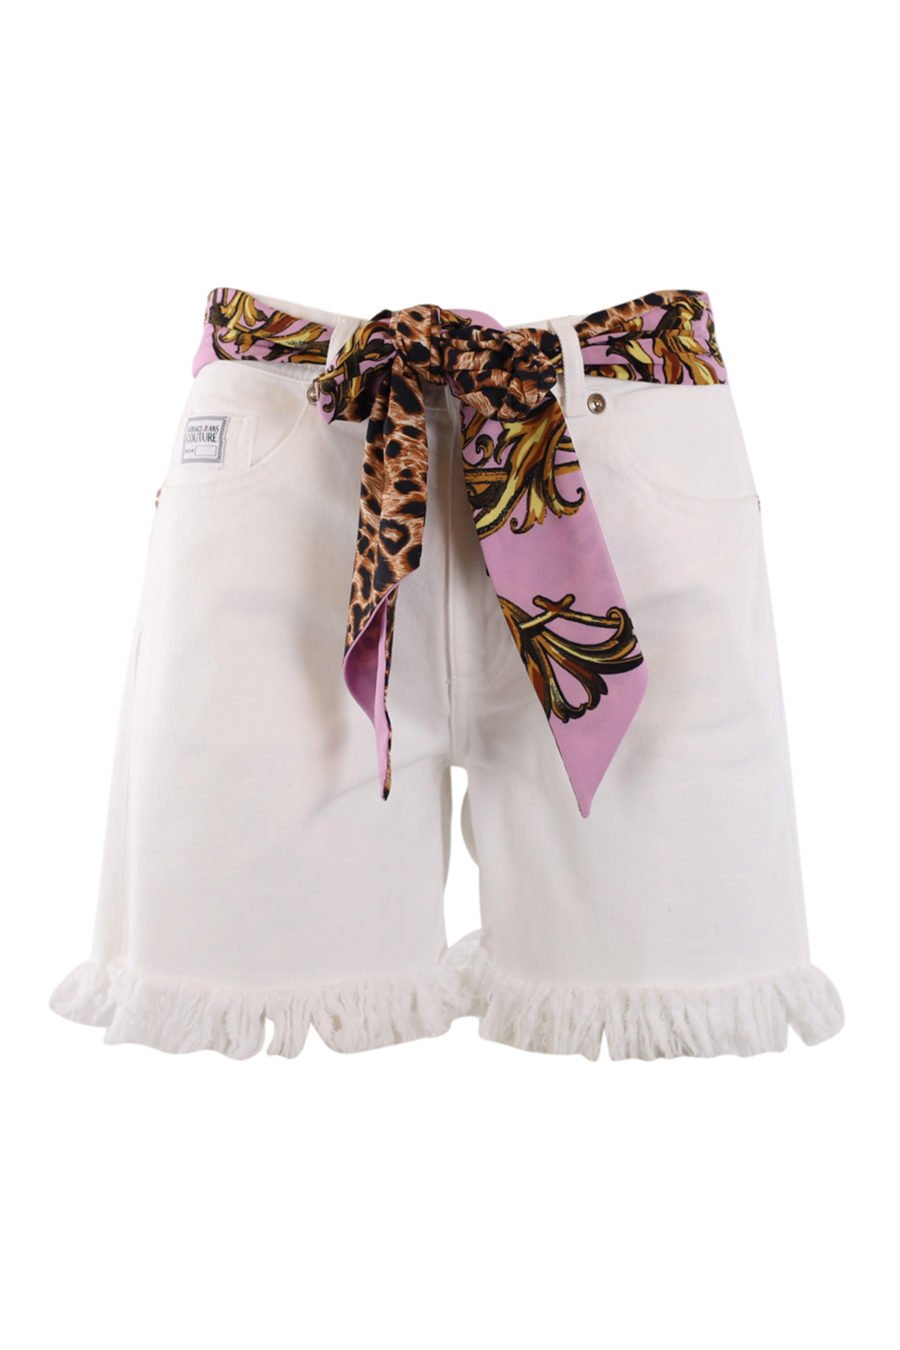 Pantalón corto blanco con pañoleta reversible - IMG 0591